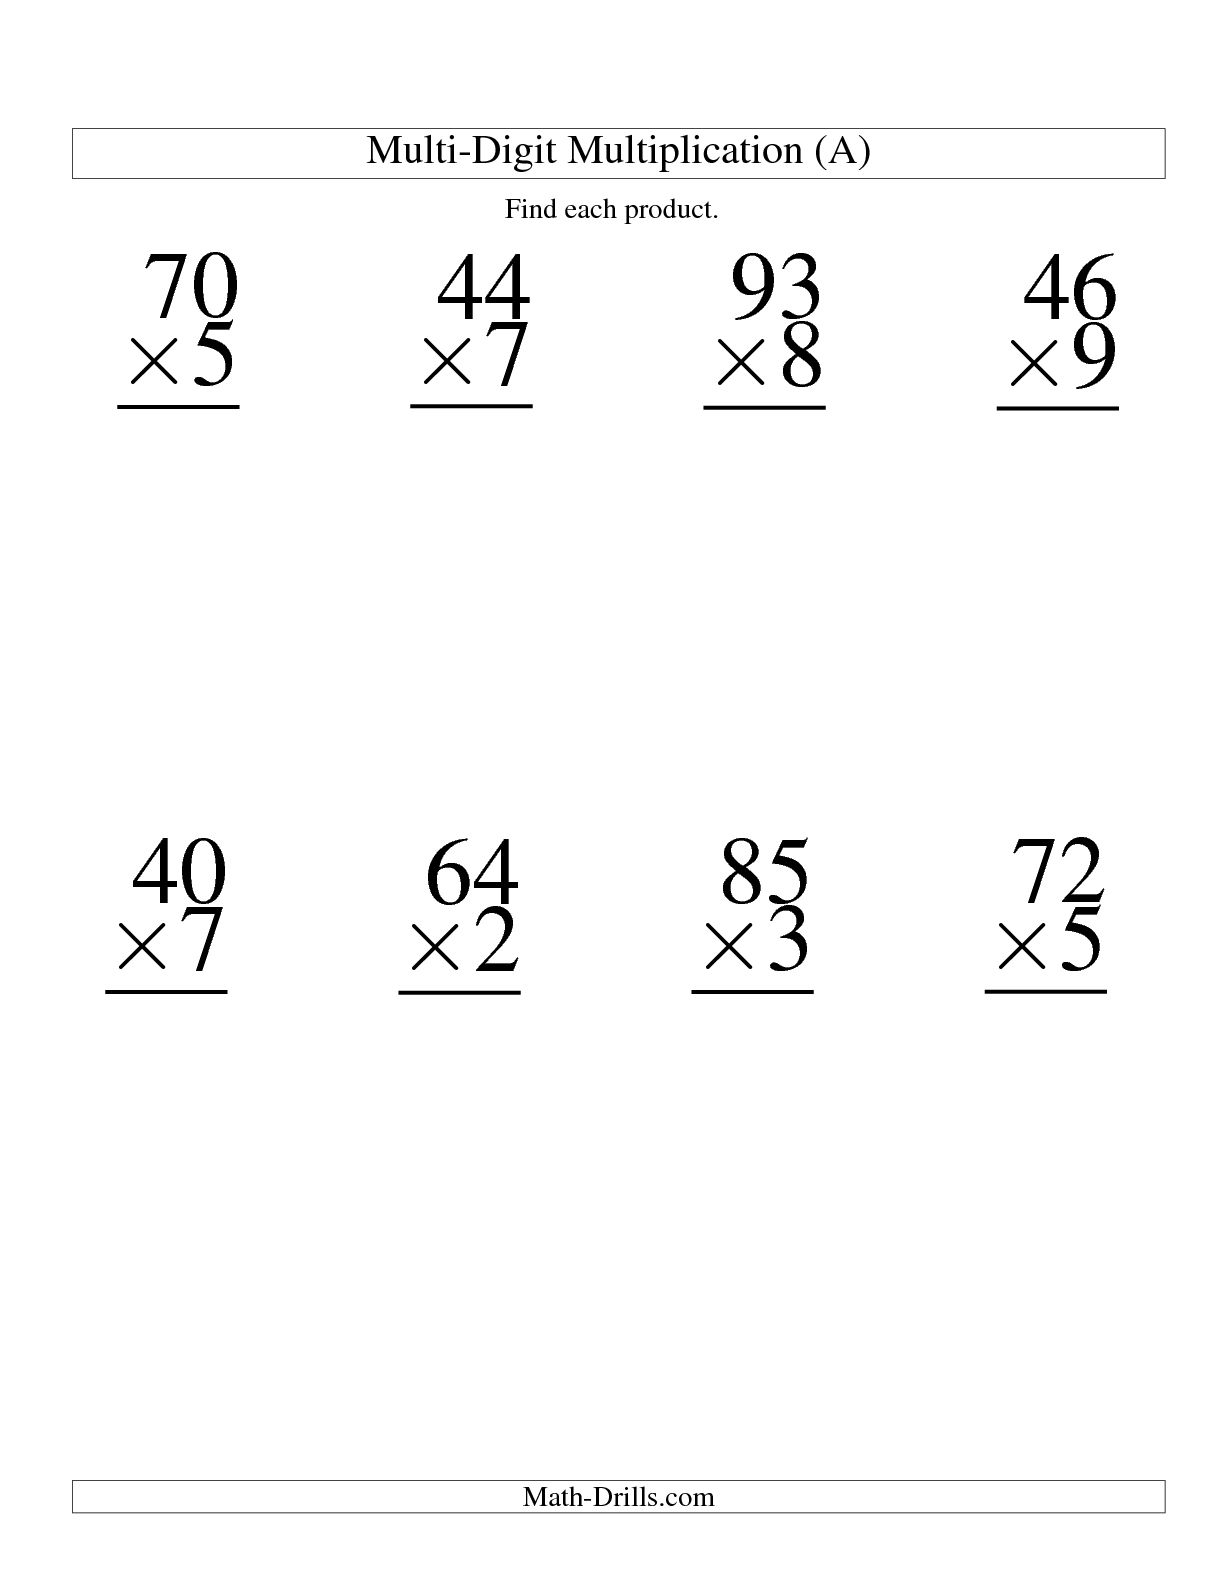 double-digit-multiplication-worksheets-99worksheets-2-digit-by-2-digit-multiplication